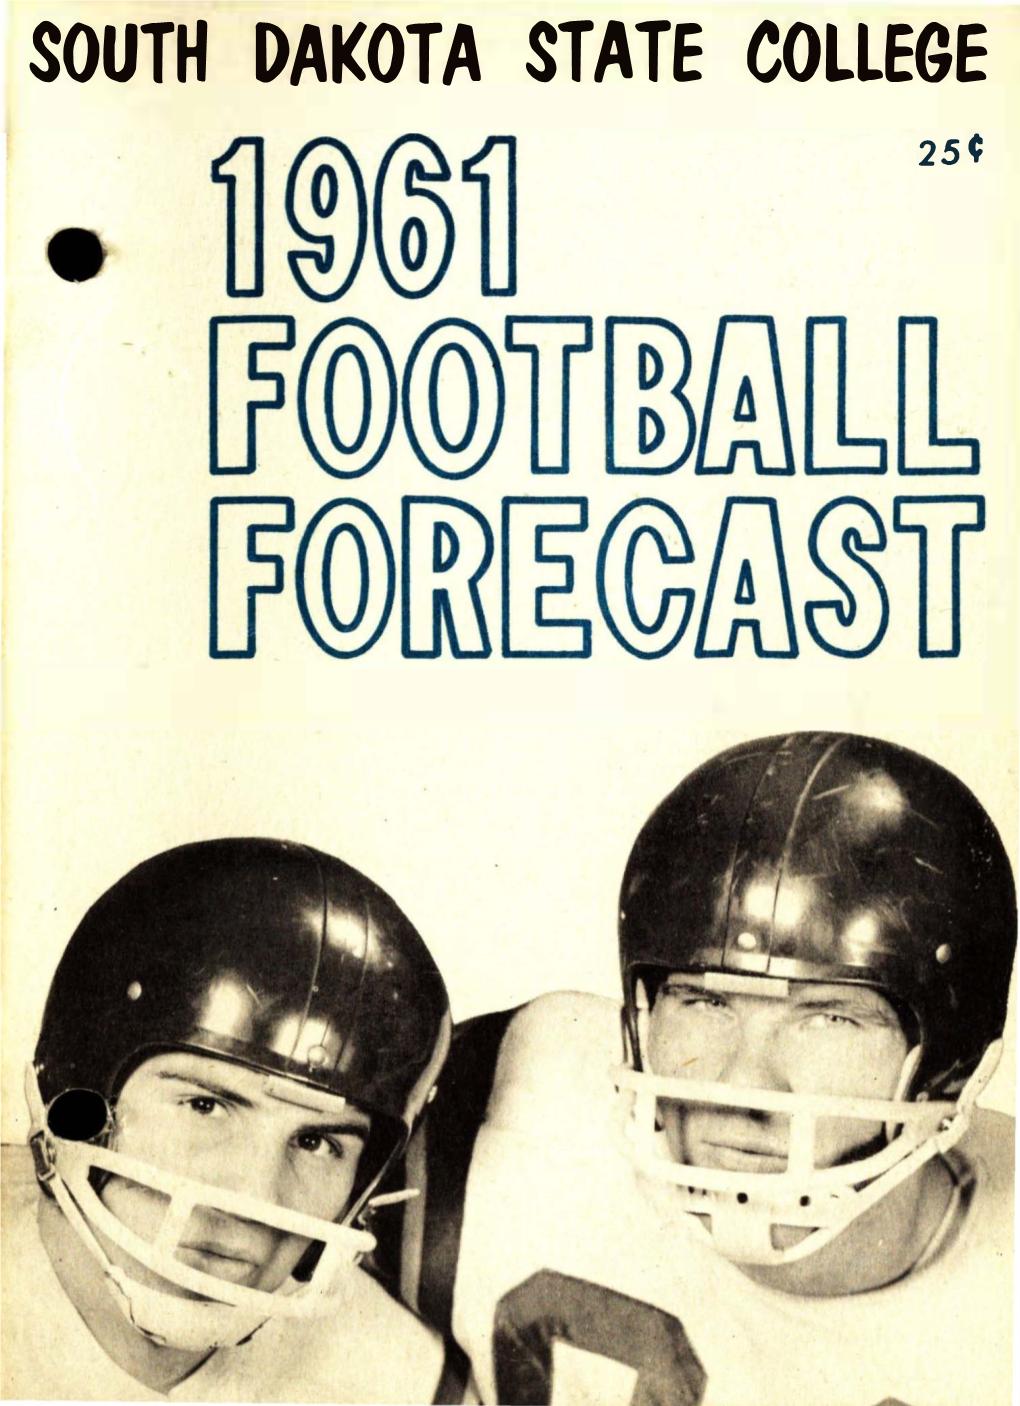 South Dakota State College 1961 Football Forecast